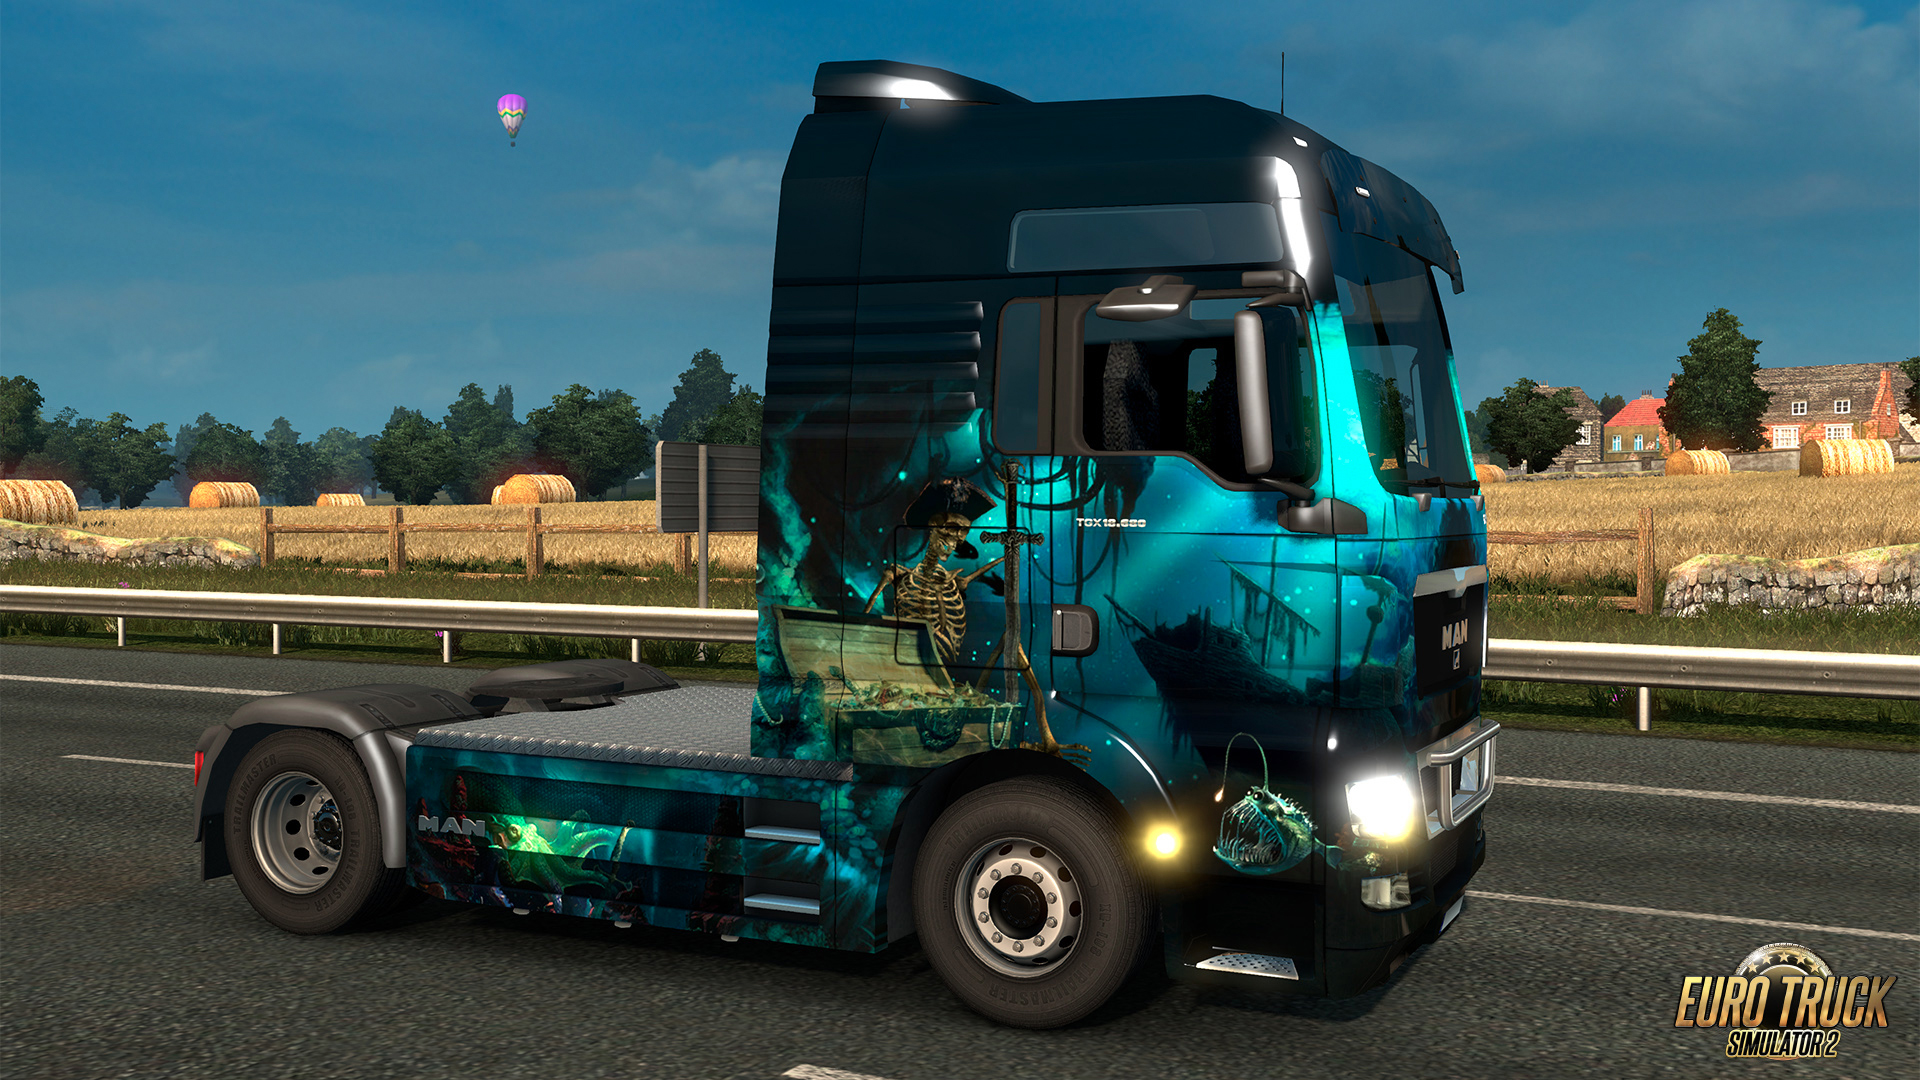 Euro truck simulator 2 - spanish paint jobs pack download free